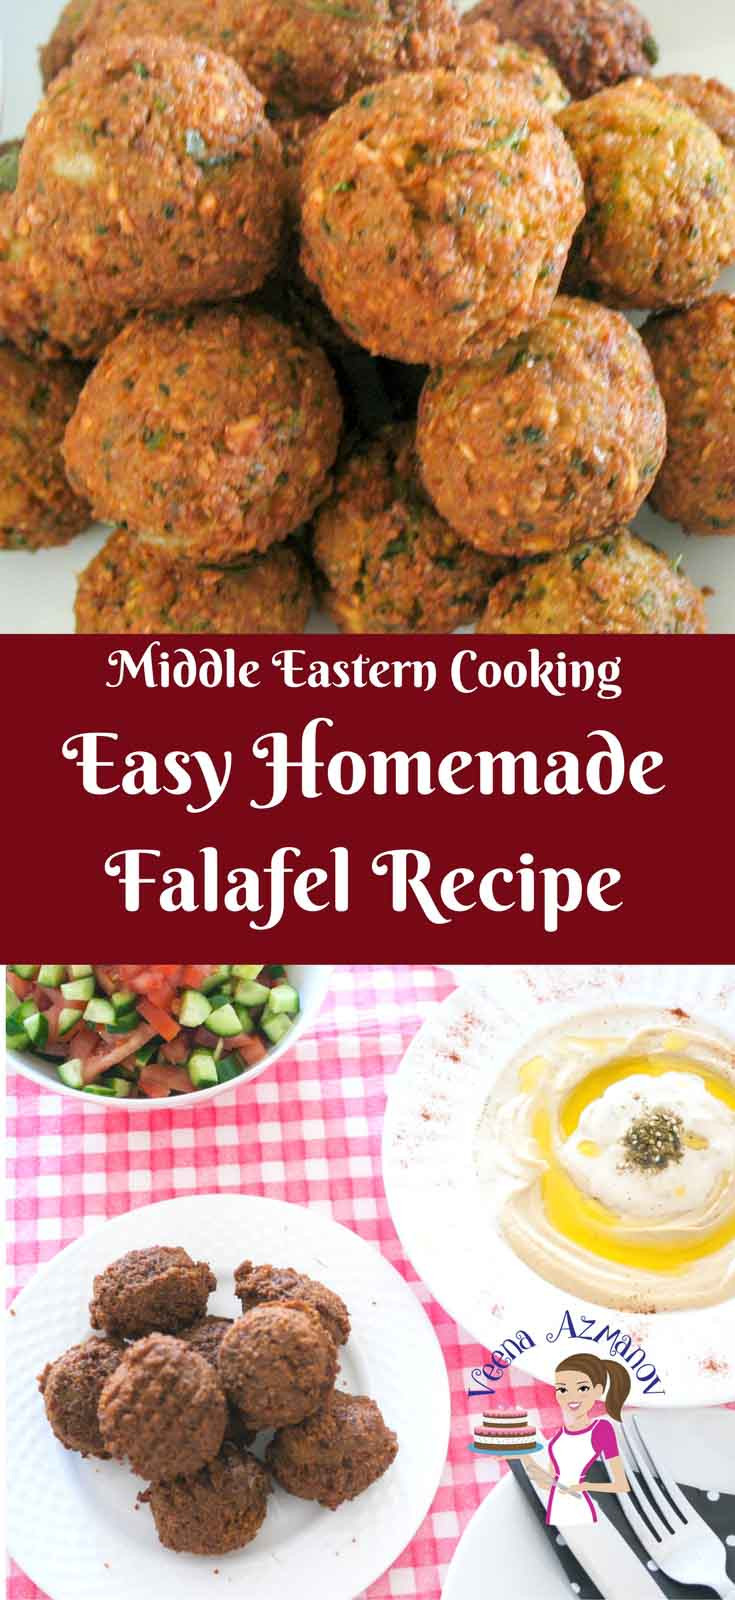 Best Middle Eastern Recipes
 Homemade Falafel Recipe Israeli Falafel Recipe Veena